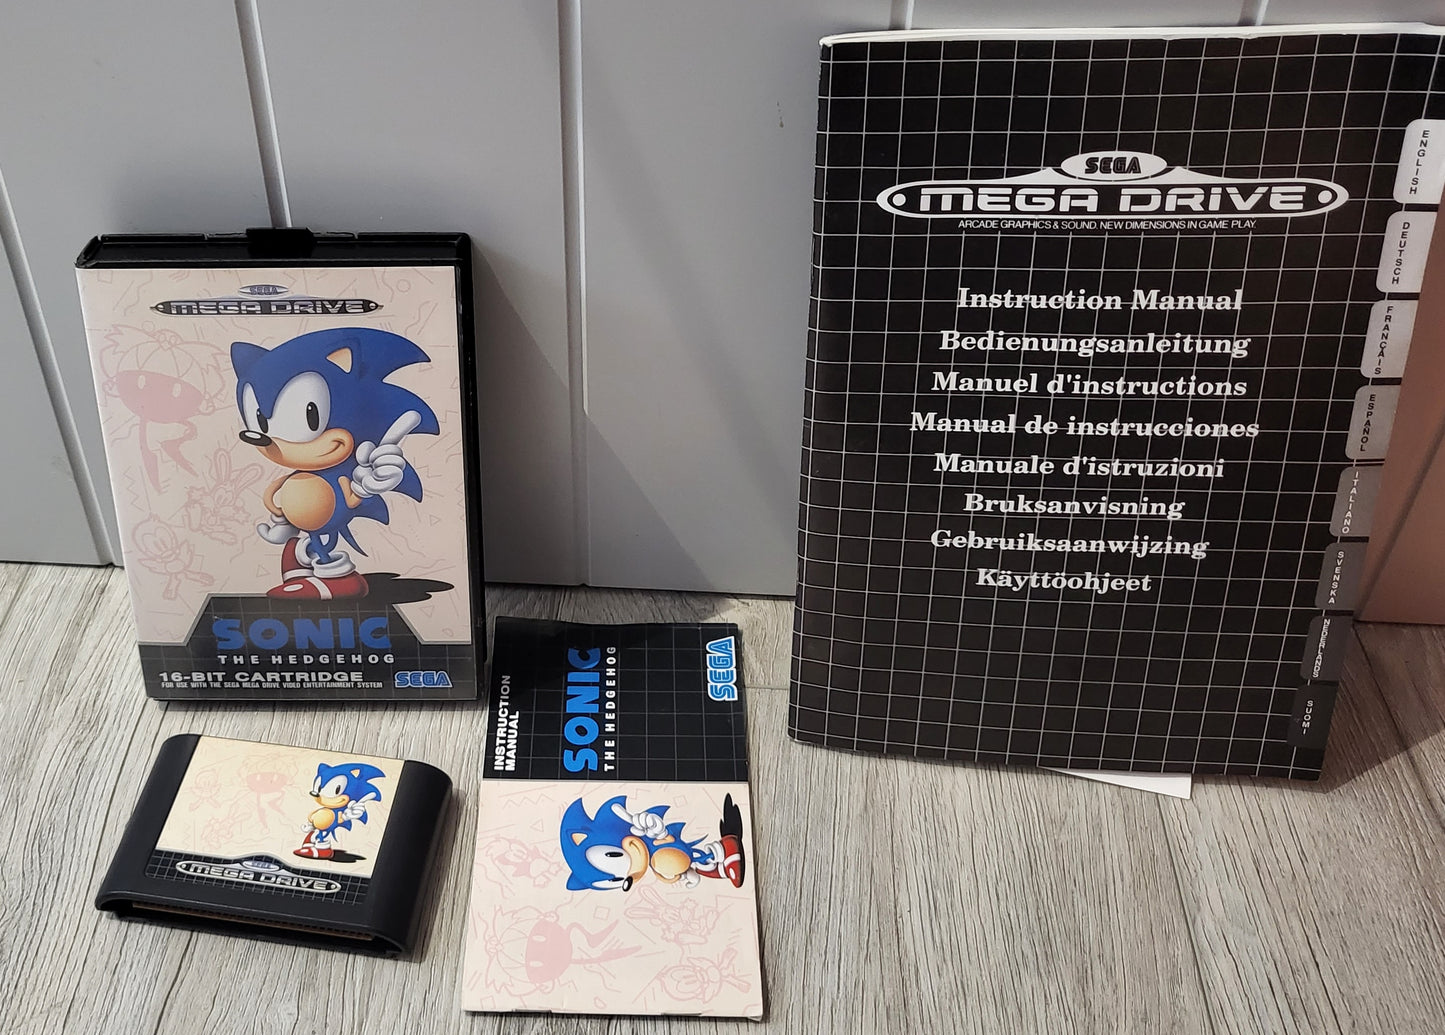 Boxed Sega Mega Console with Sonic the Hedgehog